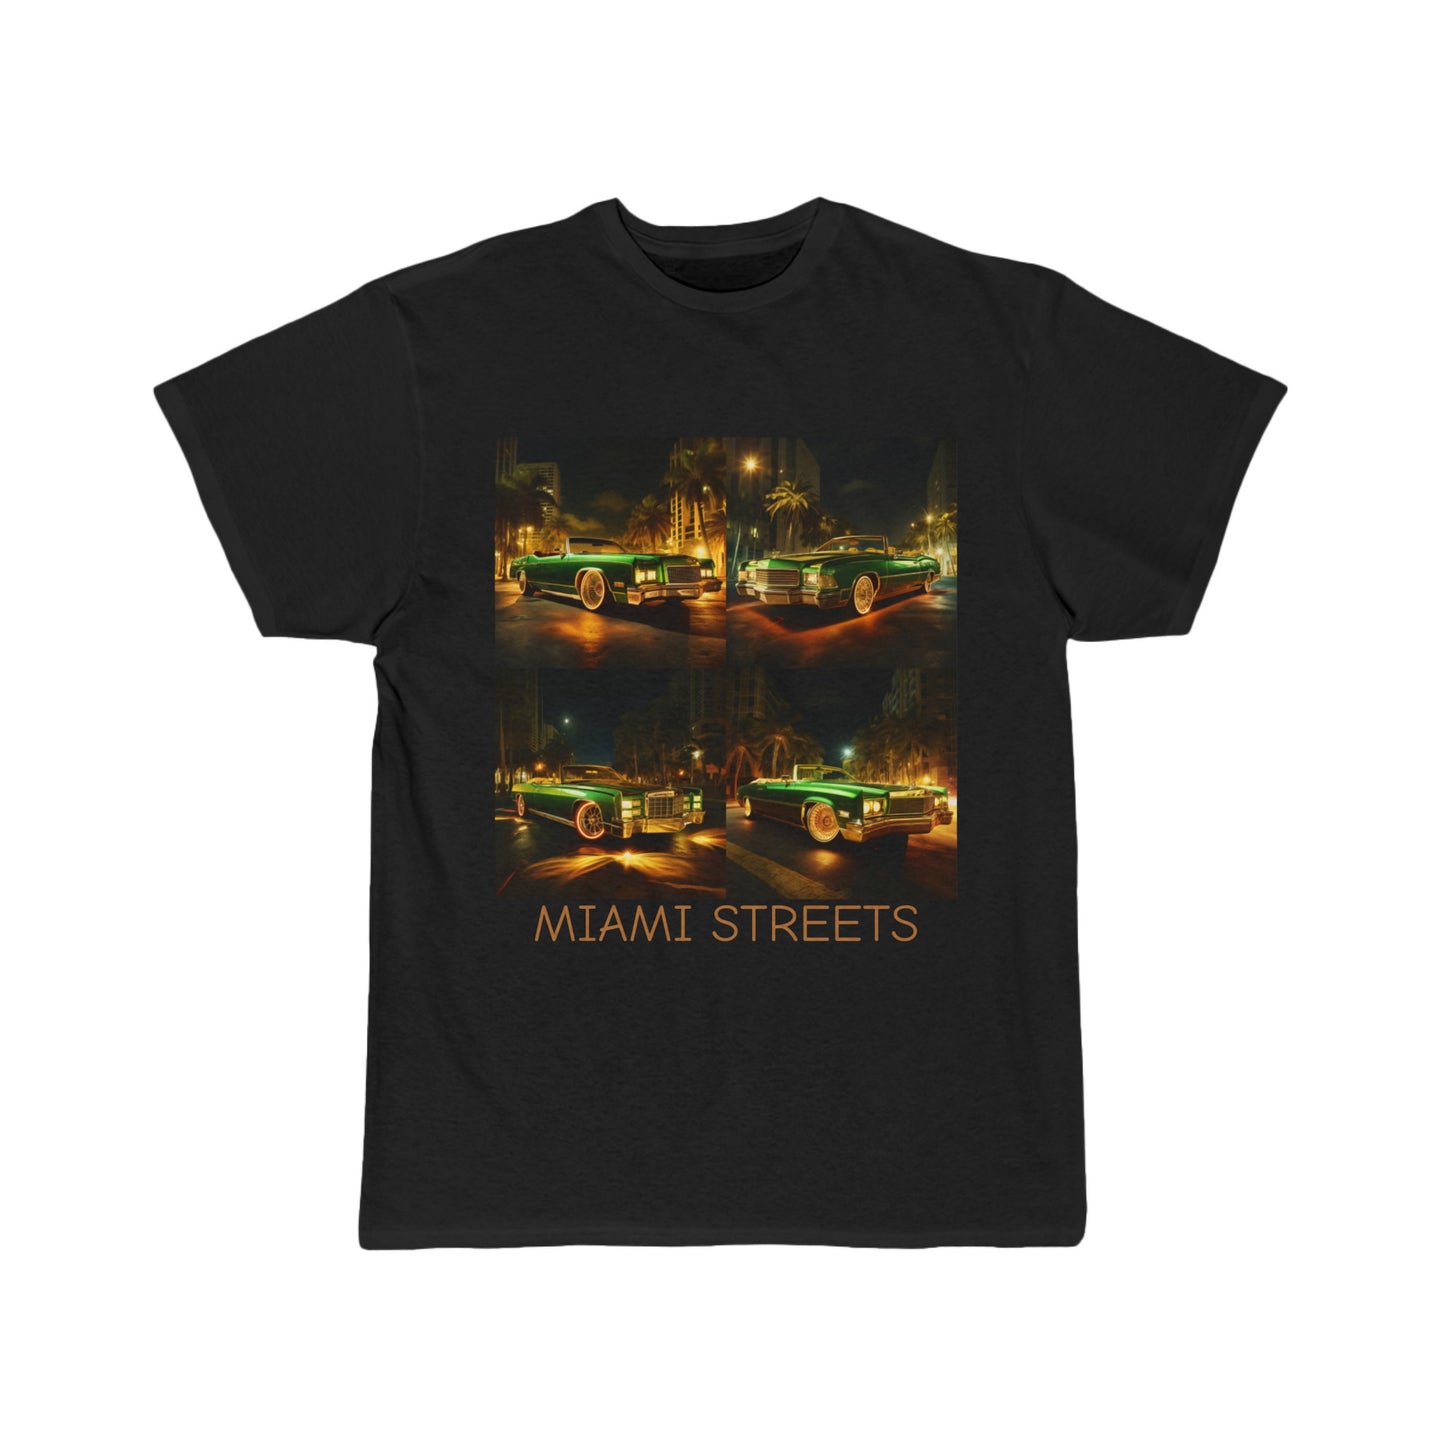 Miami Streets: Men's Short Sleeve Graphic Tee